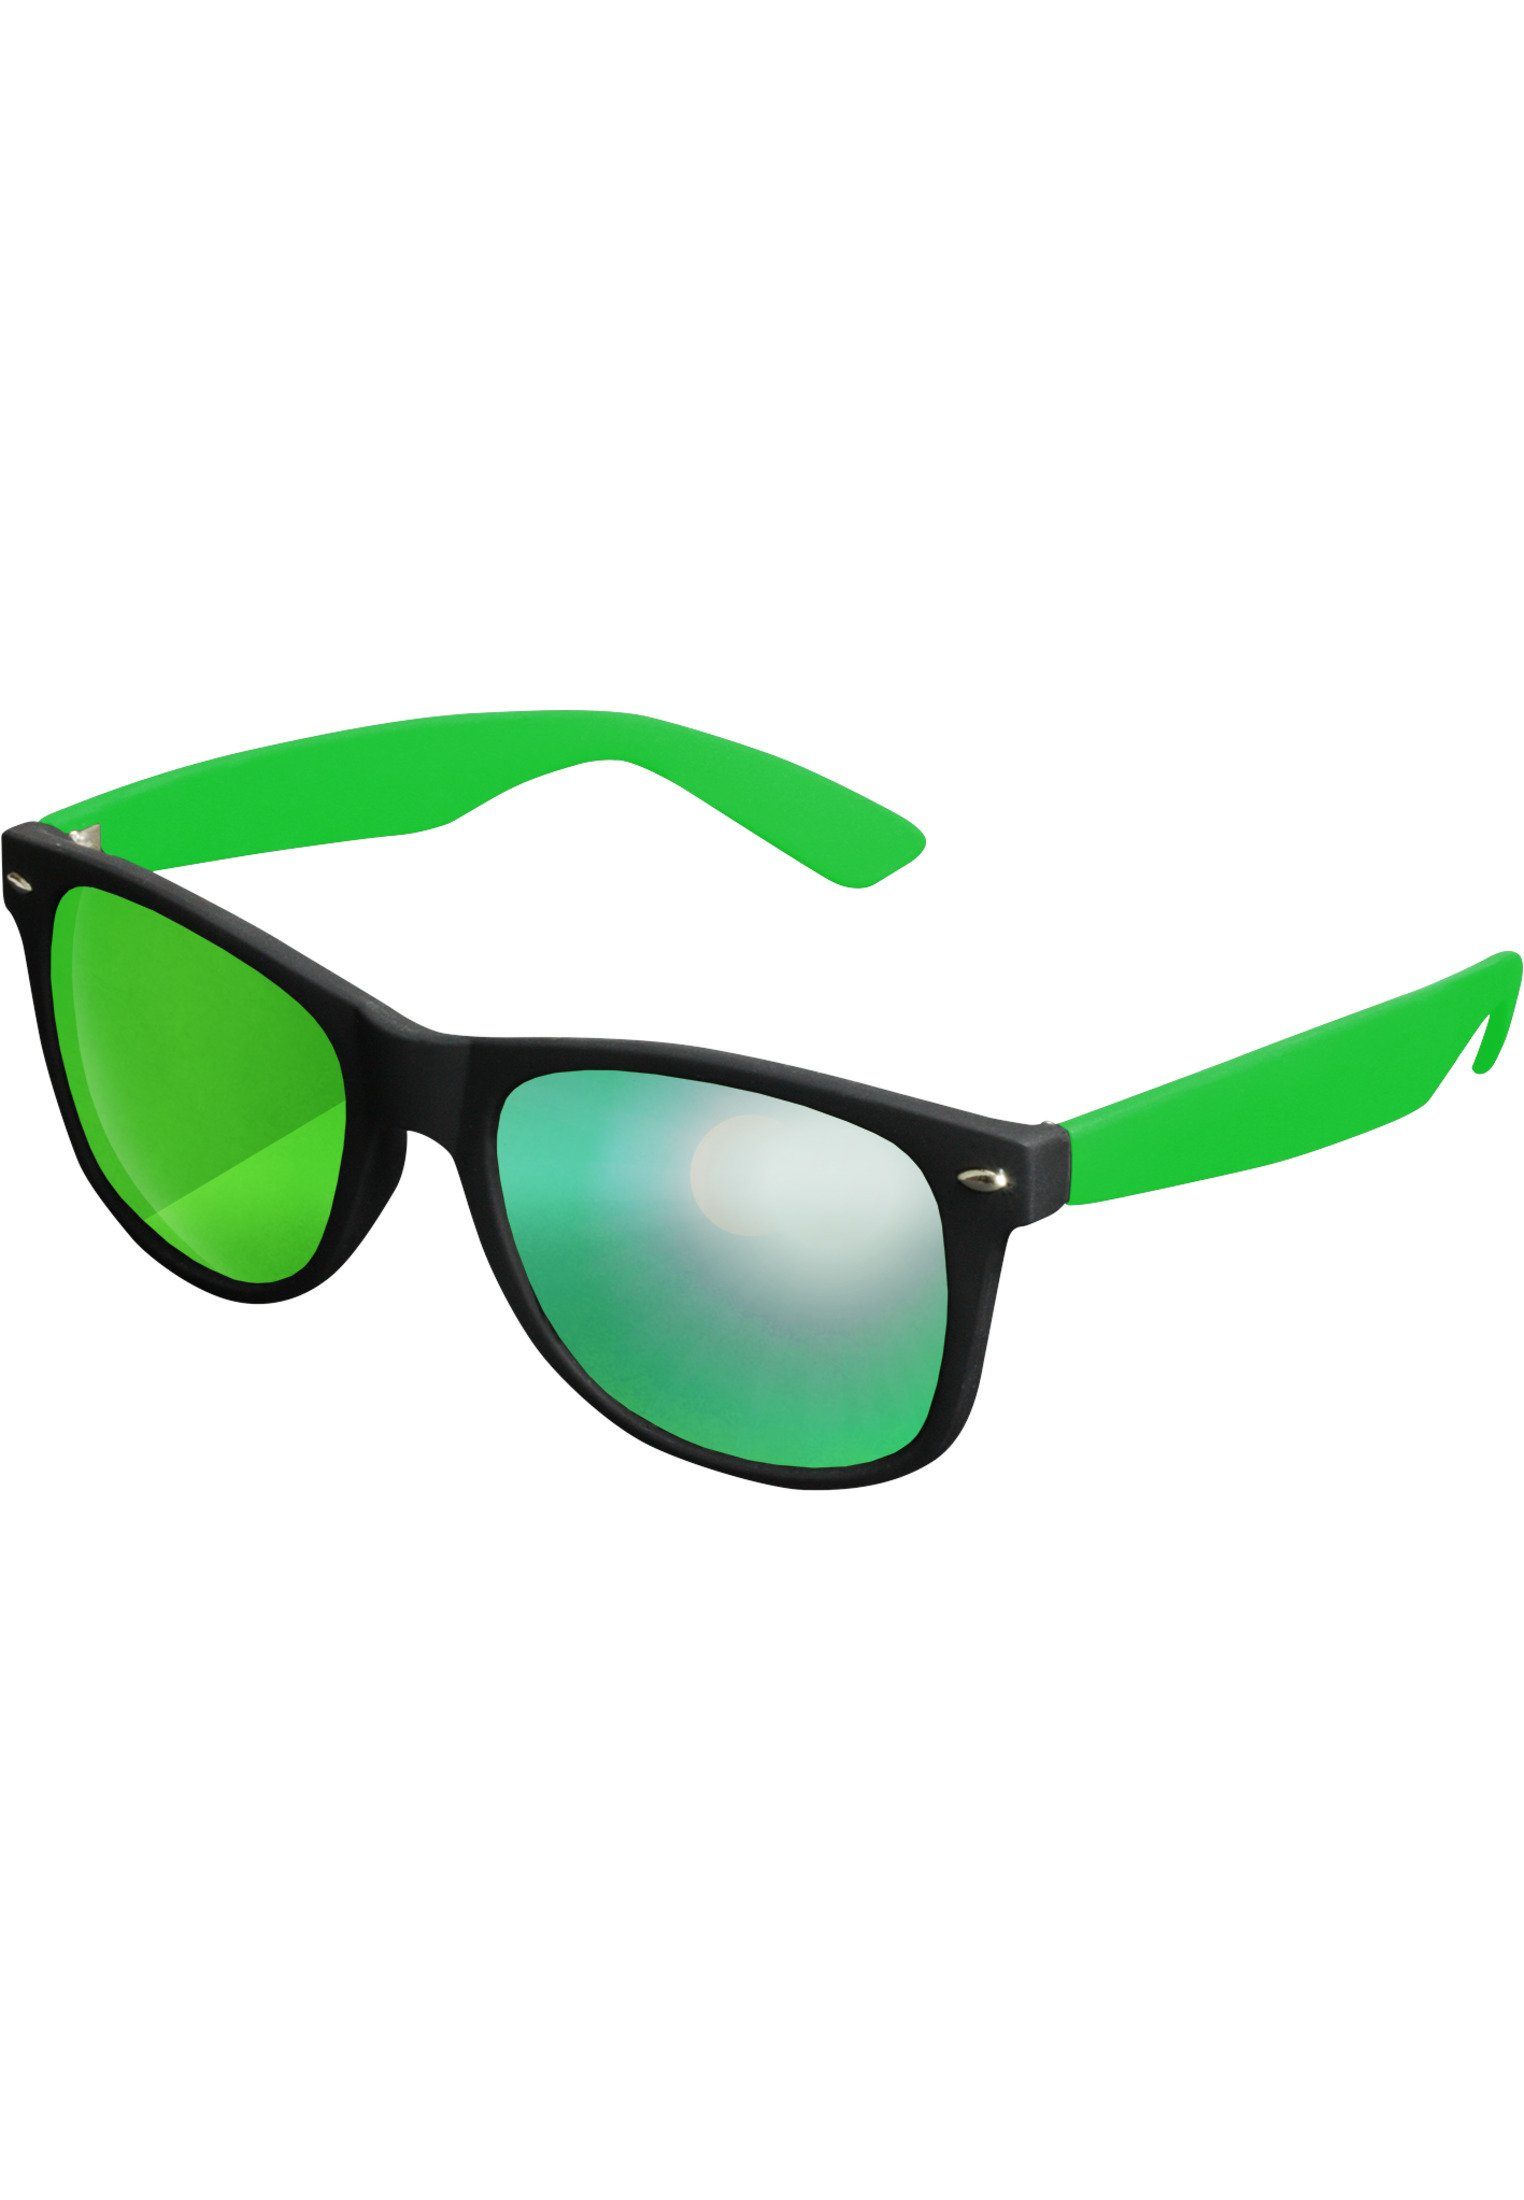 MSTRDS Sunglasses Sonnenbrille Accessoires Likoma blk/lgr Mirror